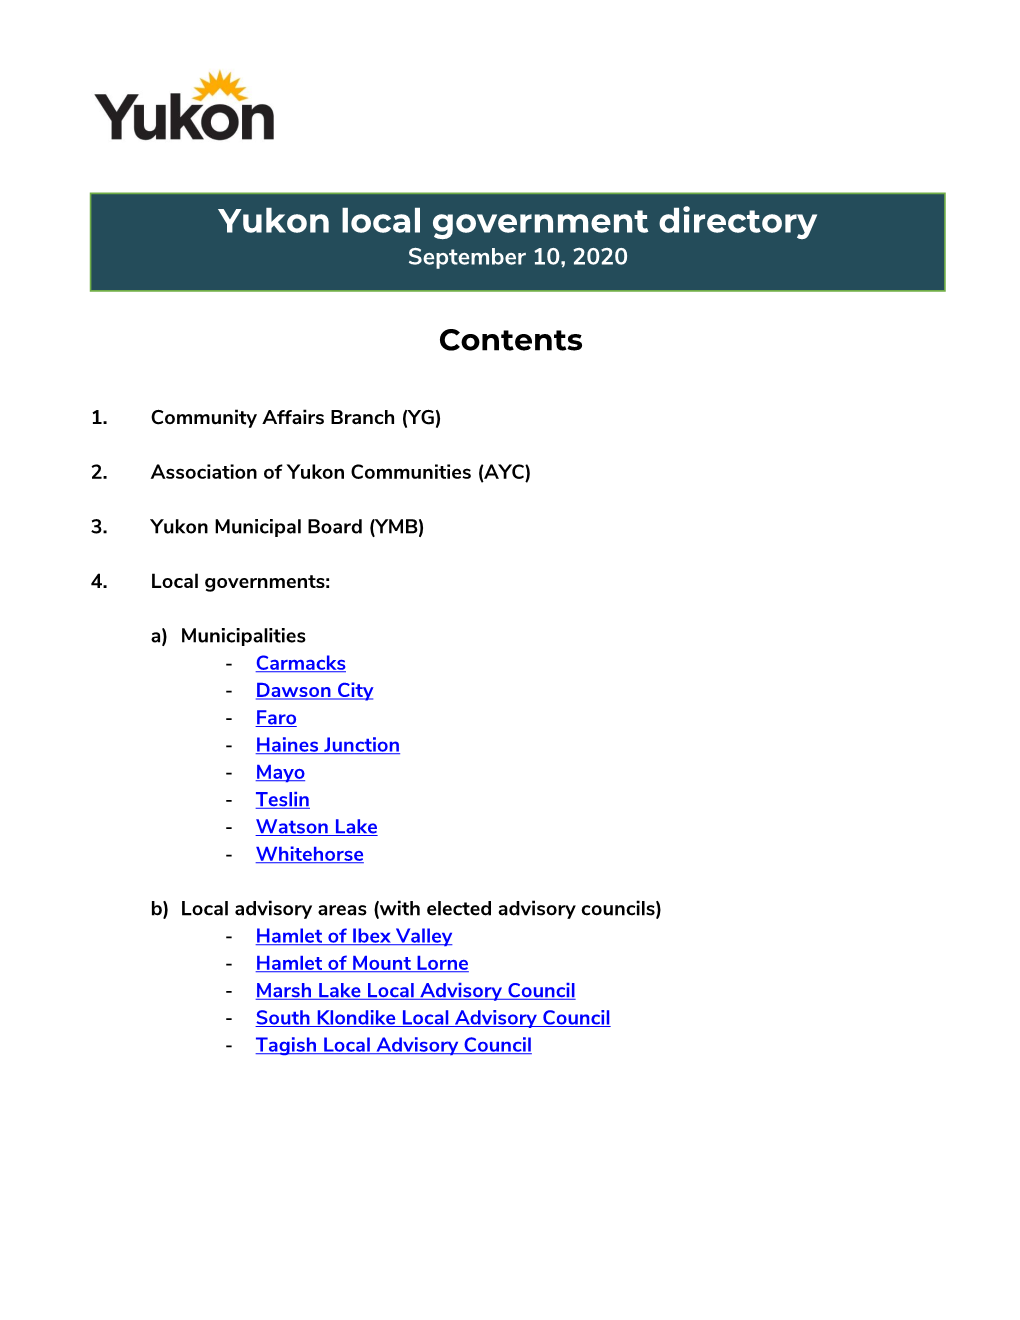 Yukon Local Government Directory